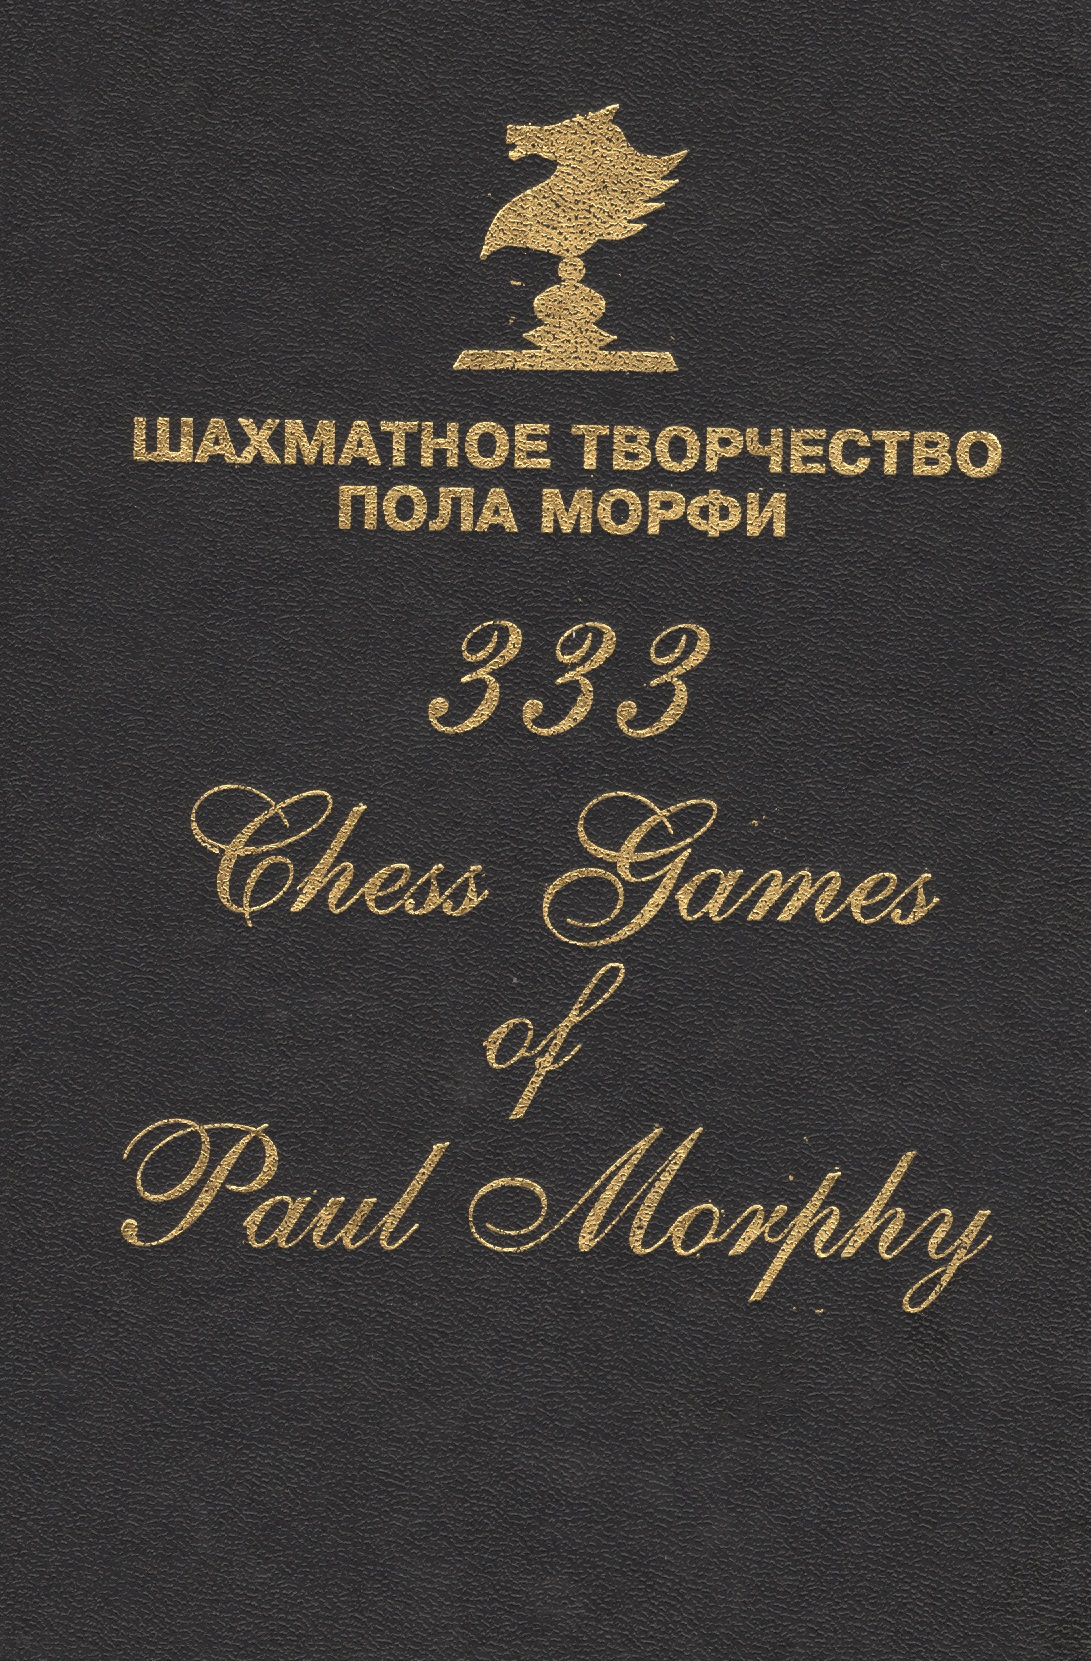 Шахматное творчество Пола Морфи 333 Chess games of Paul Morphy (Сафиуллин) шахматные партии пола морфи мароцм г